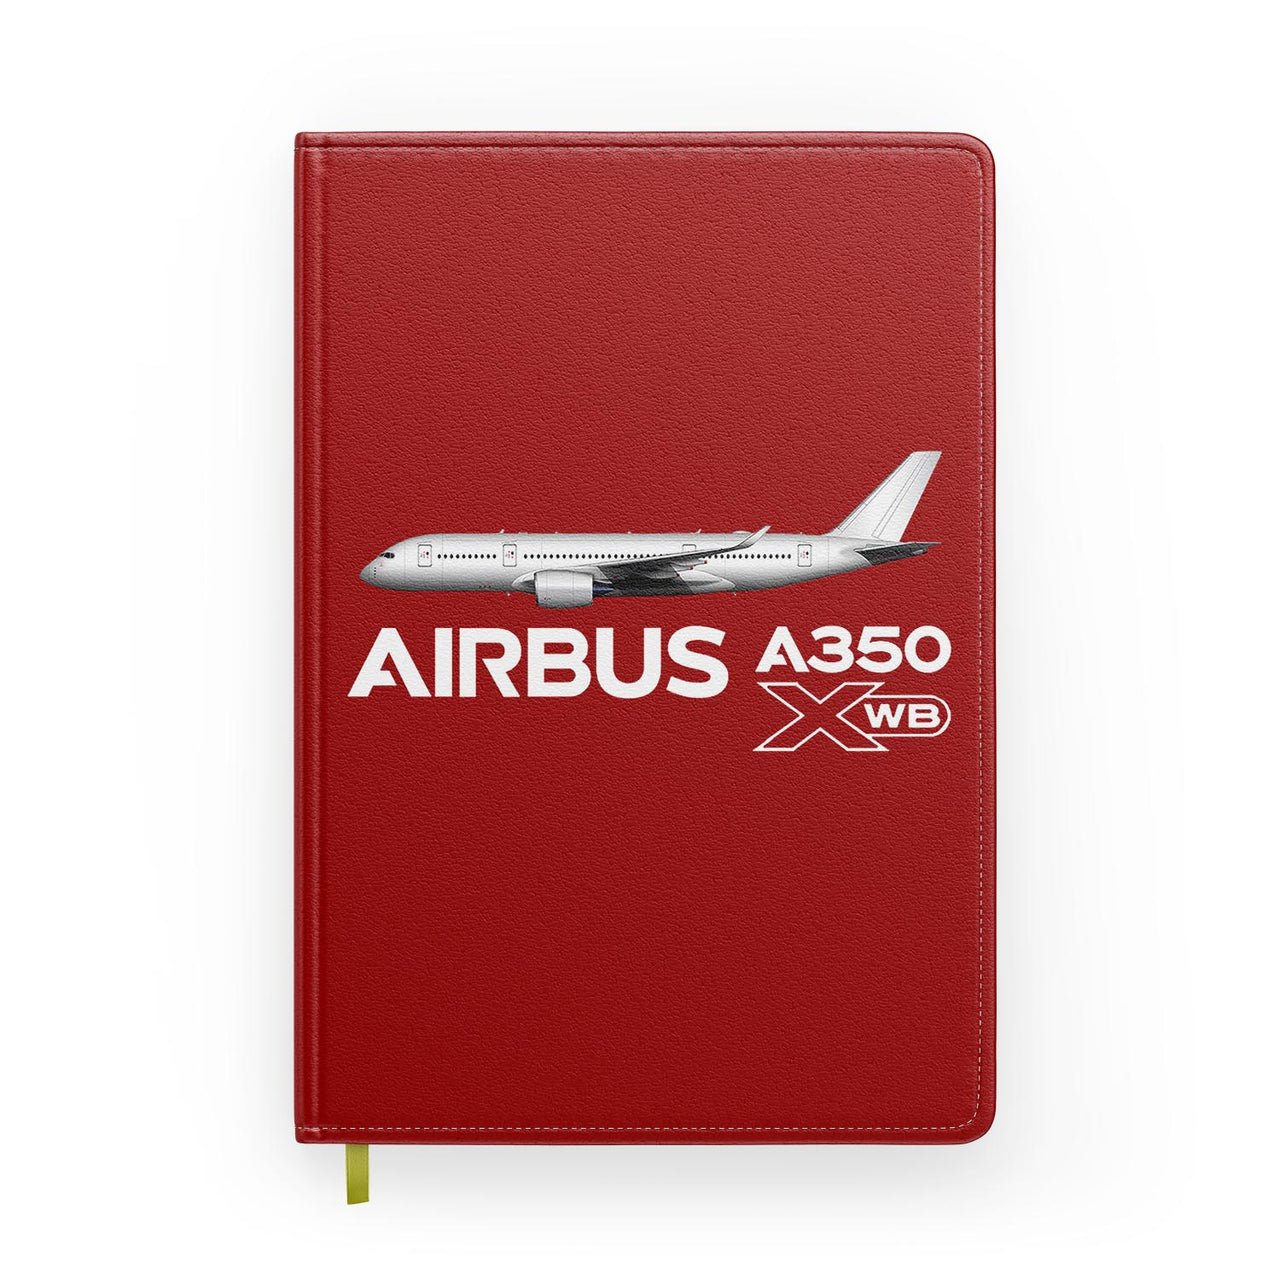 The Airbus A350 XWB Designed Notebooks